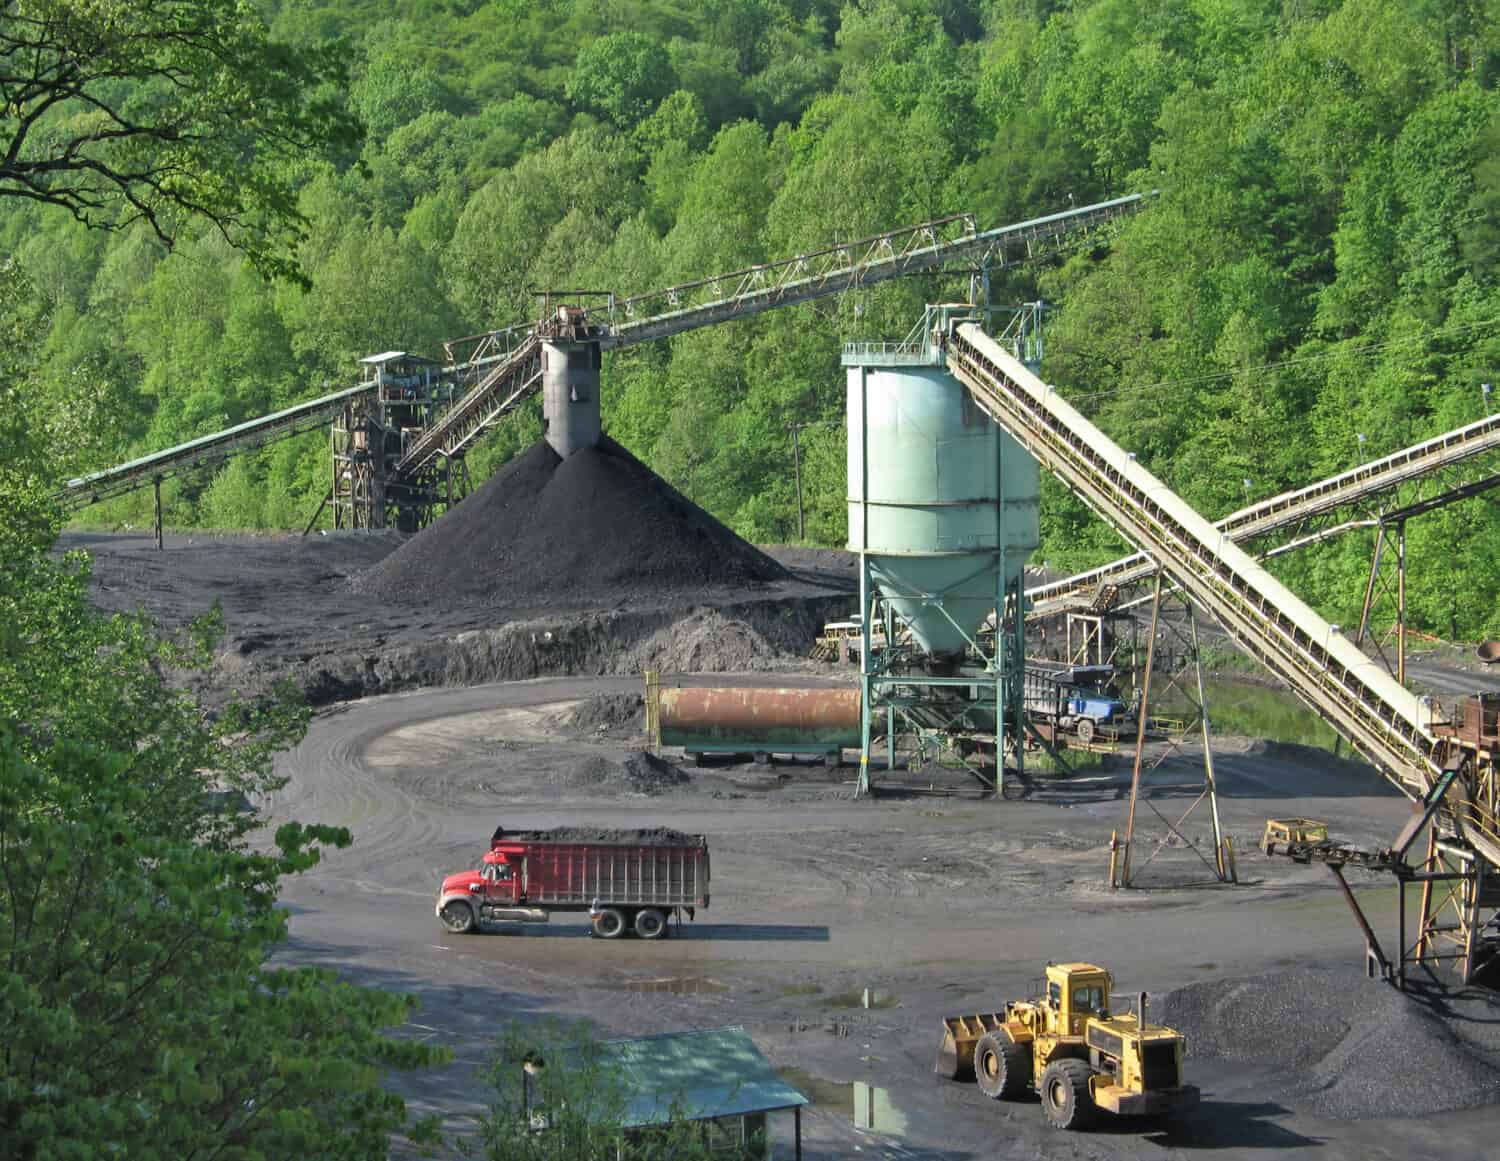 Coal processing facility in Kentucky